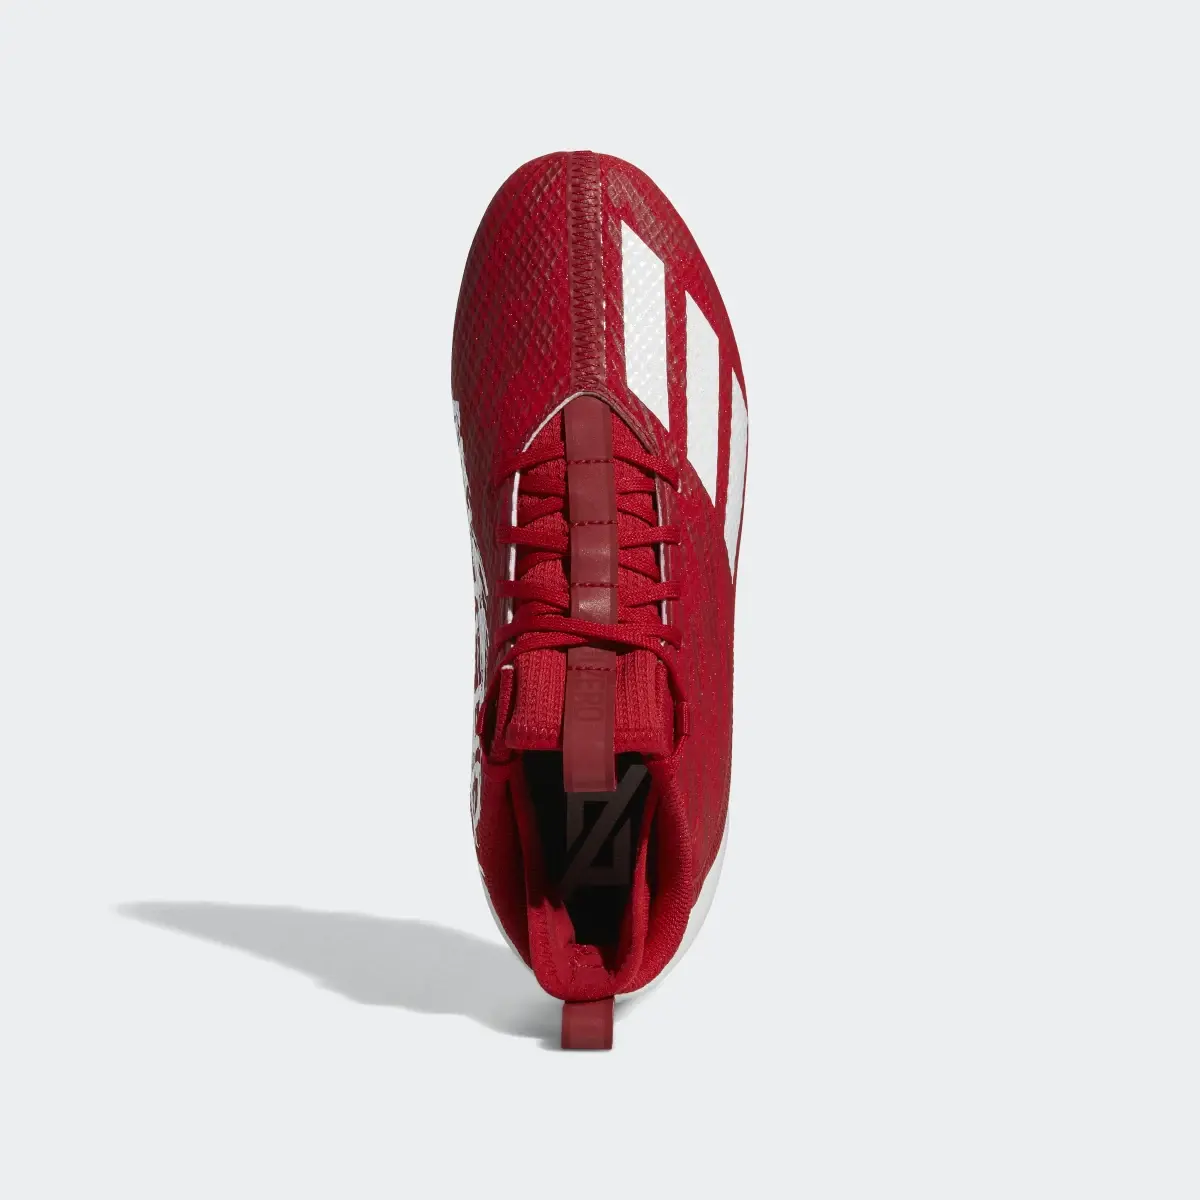 Adidas Adizero Scorch Cleats. 3